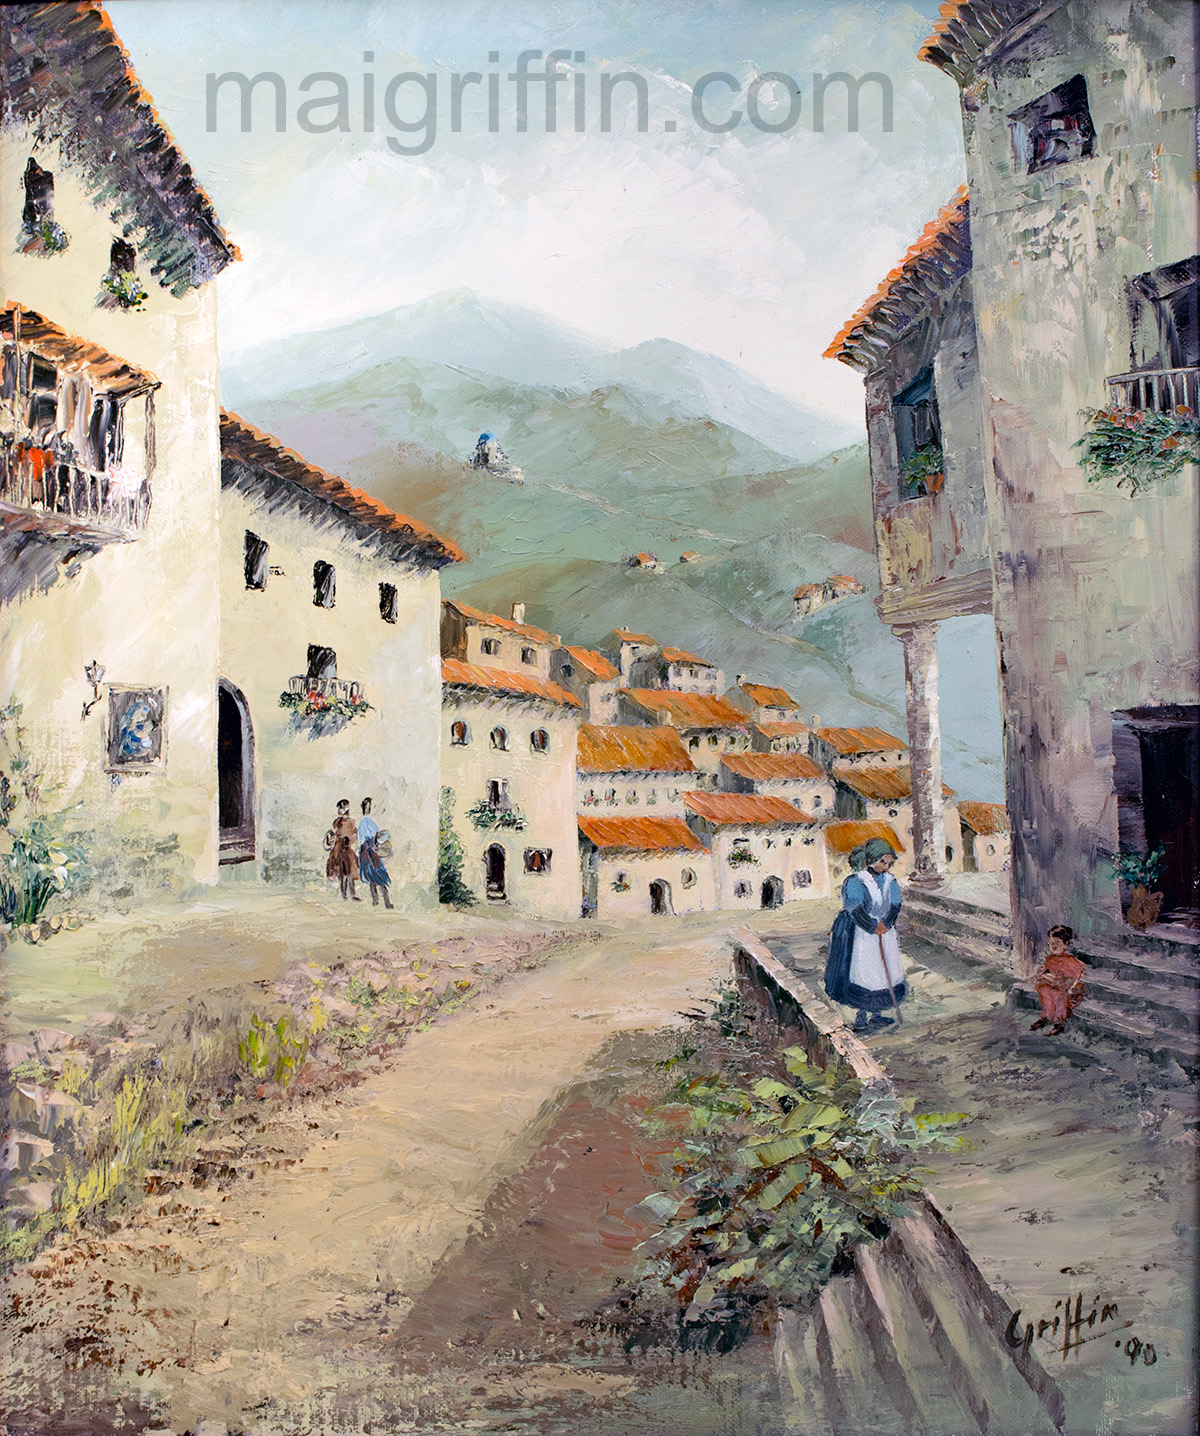 The Village Retro by Mai Griffin (c.1990)